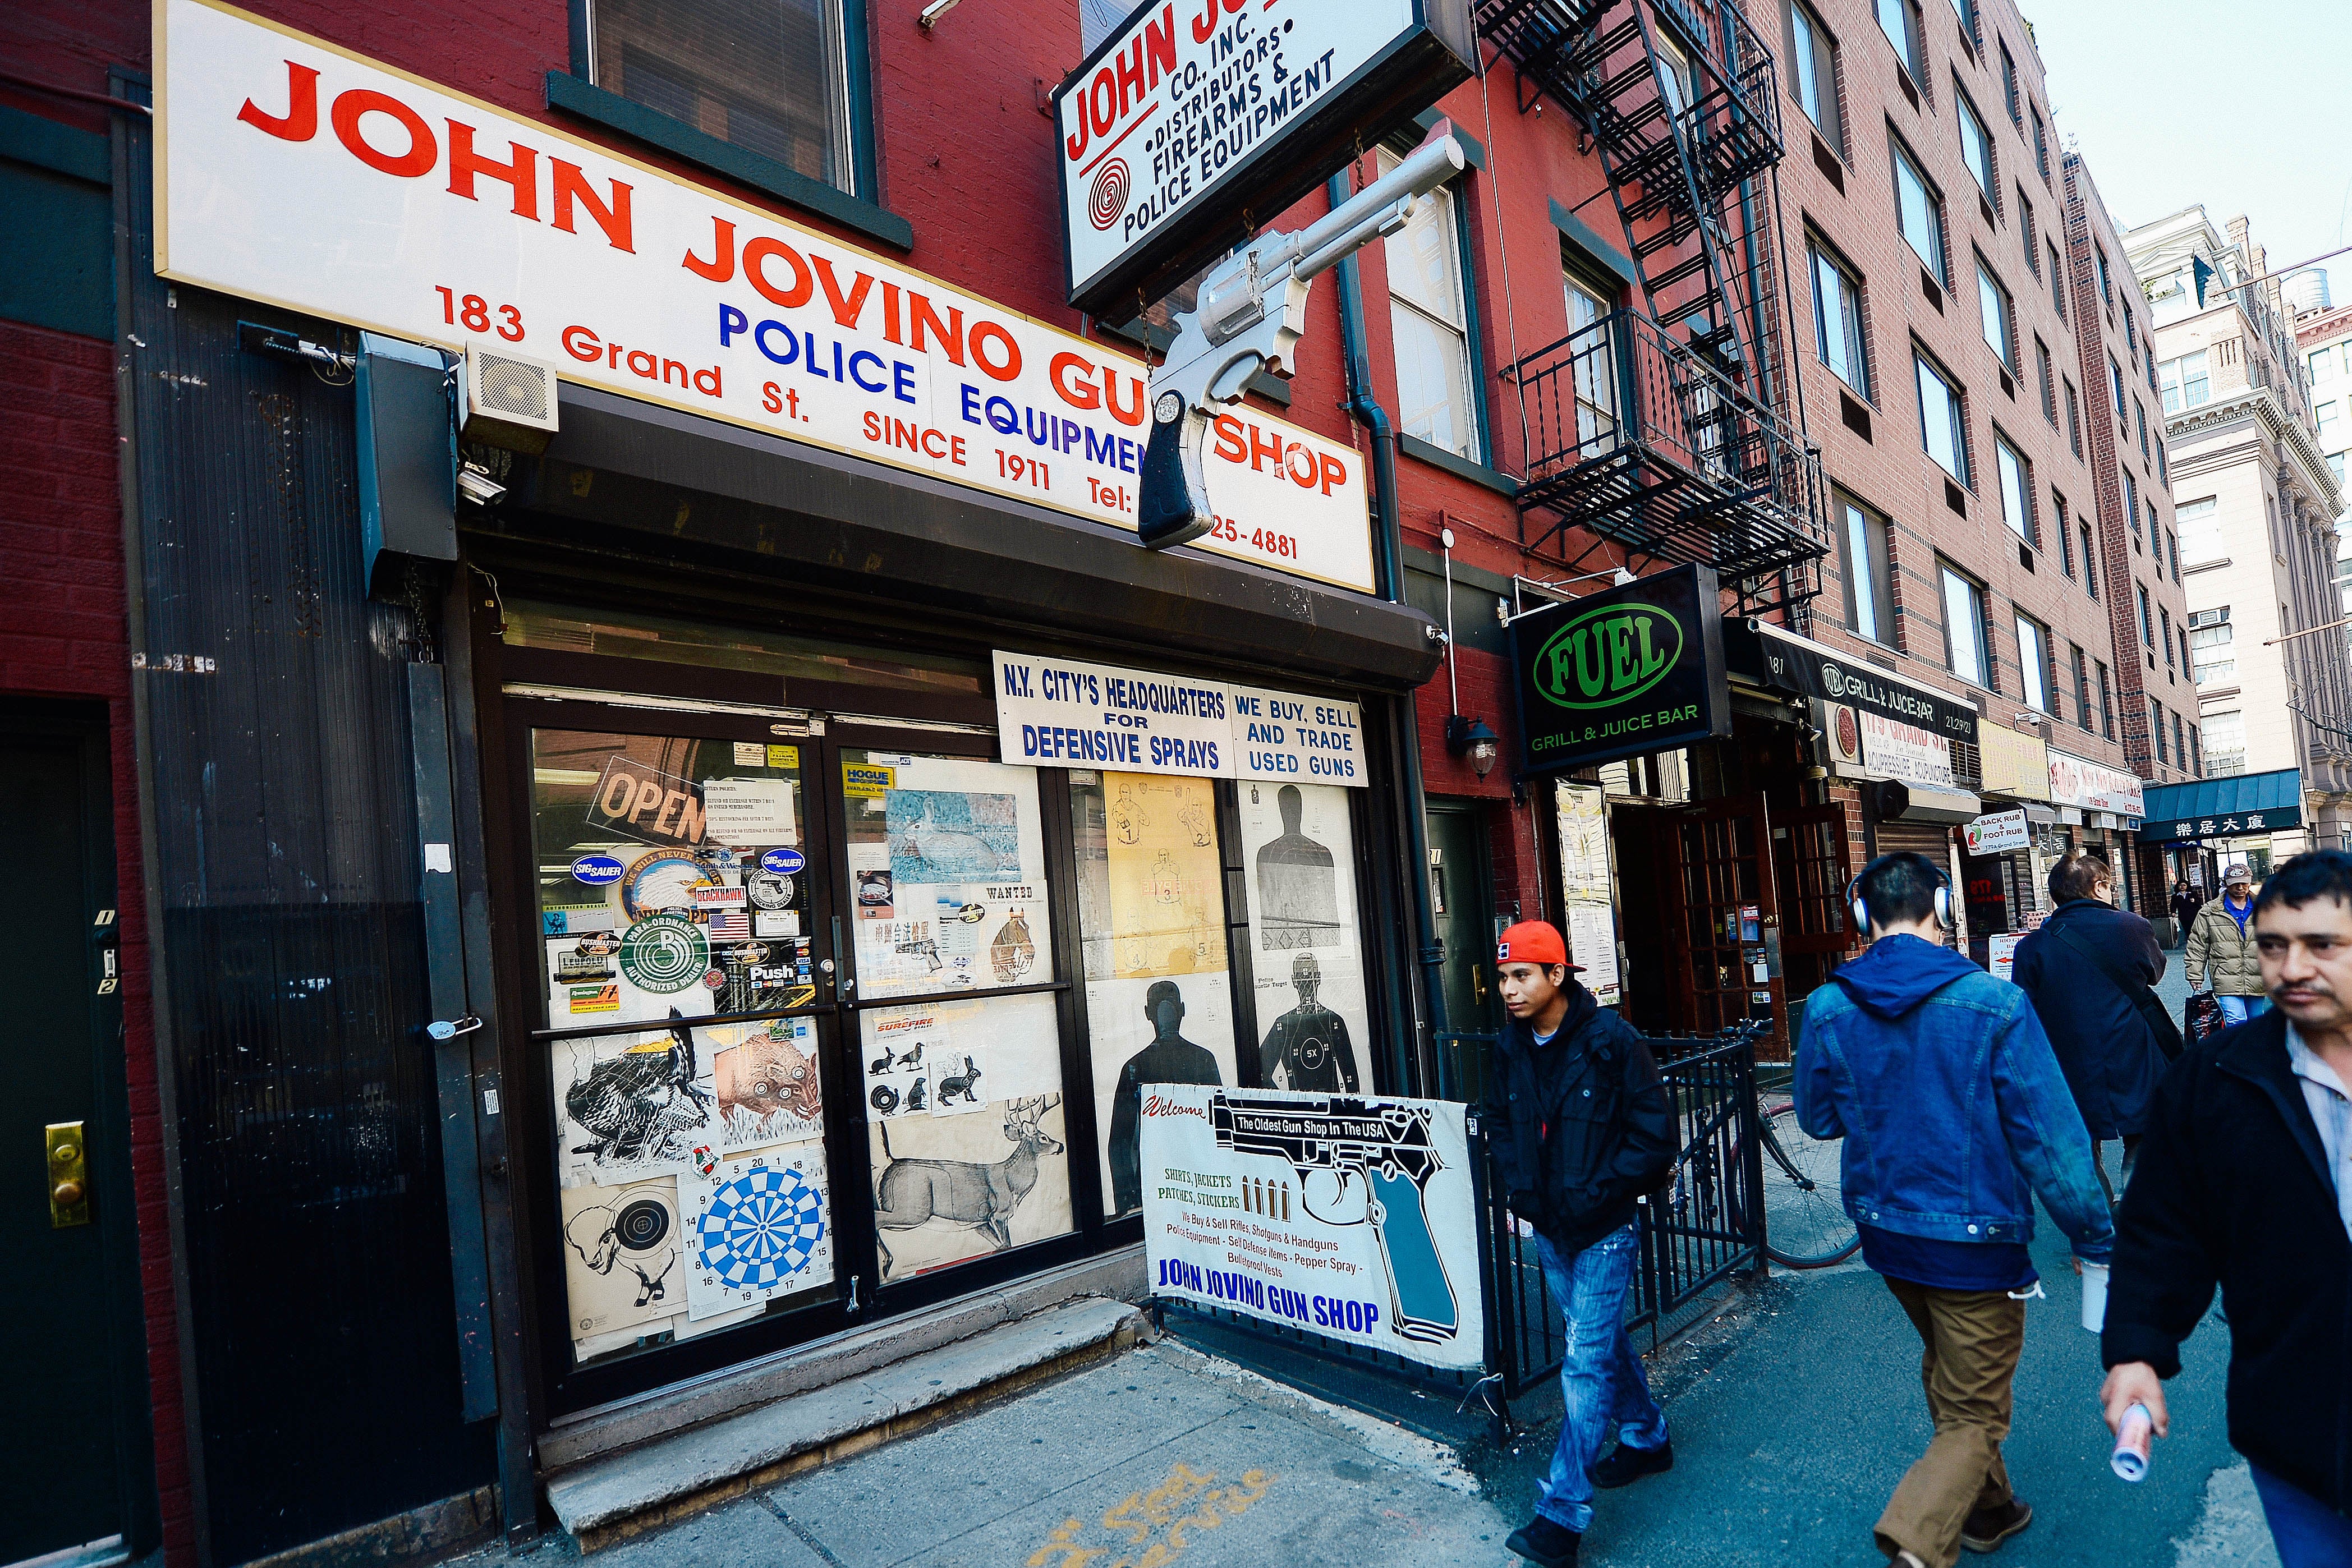 The John Jovino gun shop storefront.